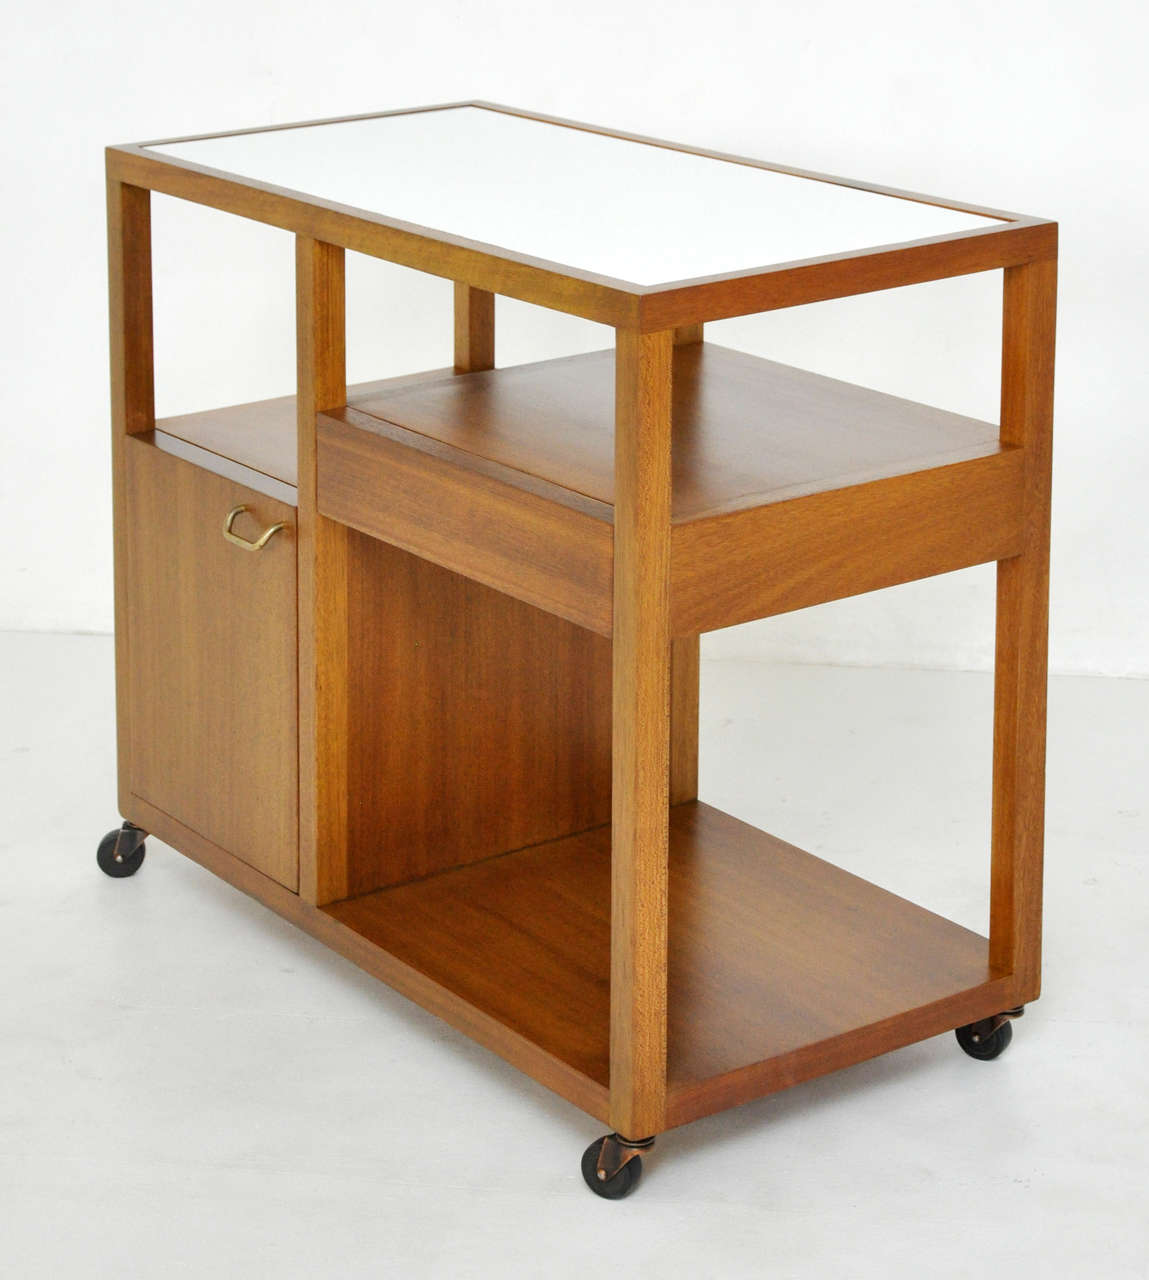 Server trolley designed by Harvey Probber. Fully restored mahogany case with white vitrolite glass top.